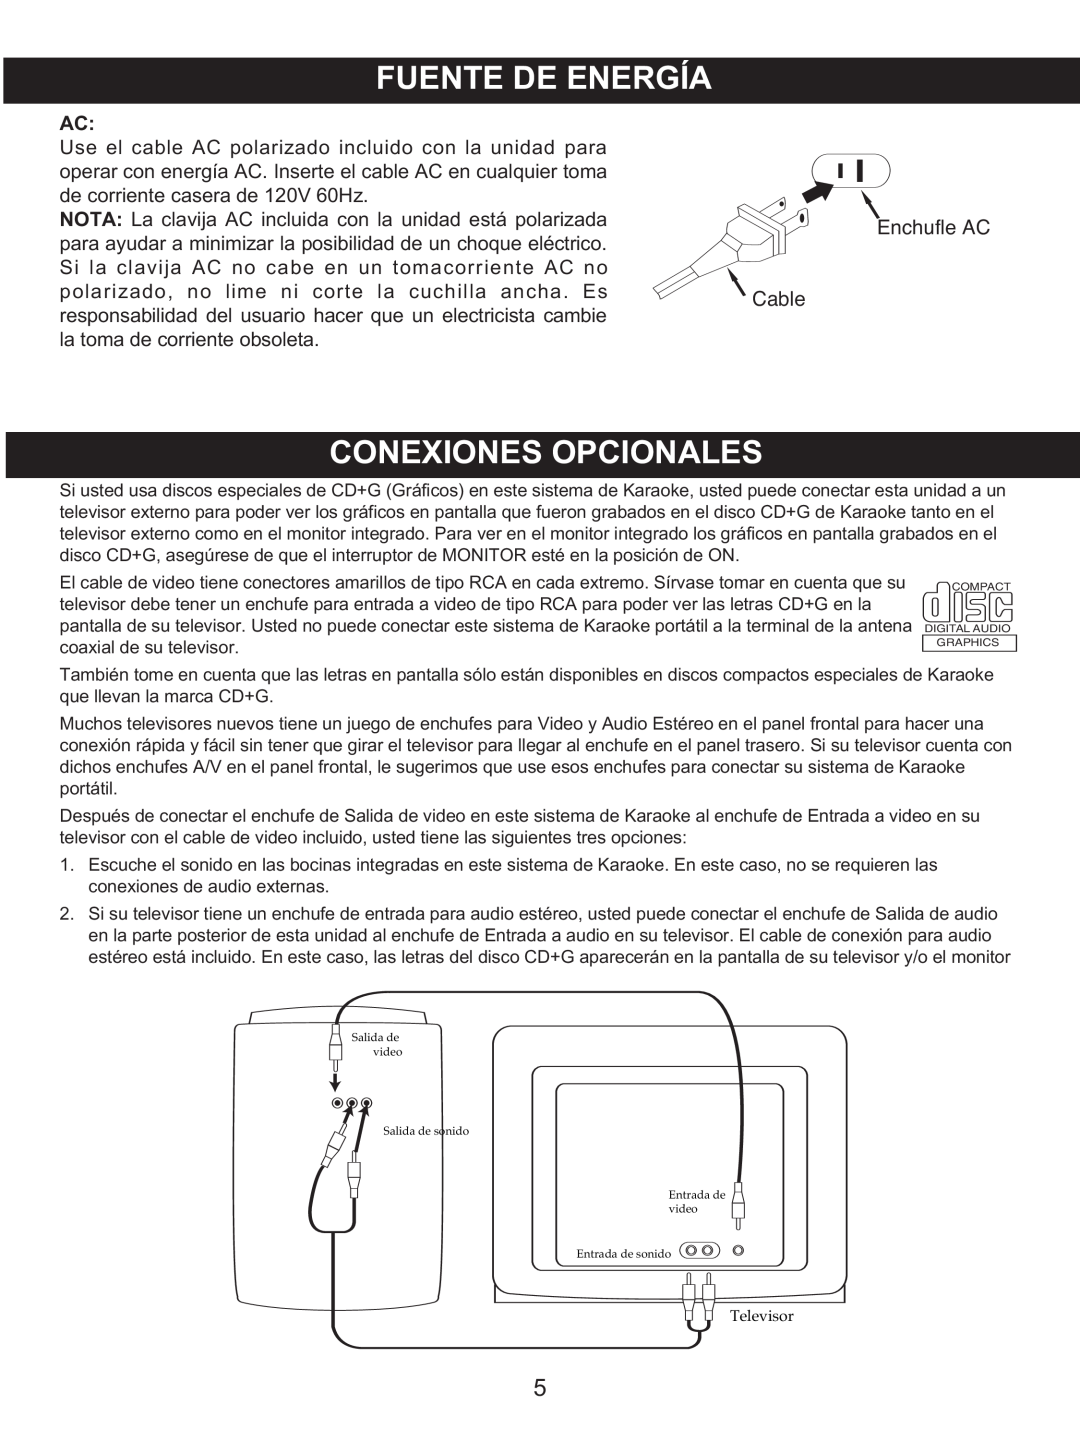 Memorex MKS2422 manual Enchufle AC, Cable 